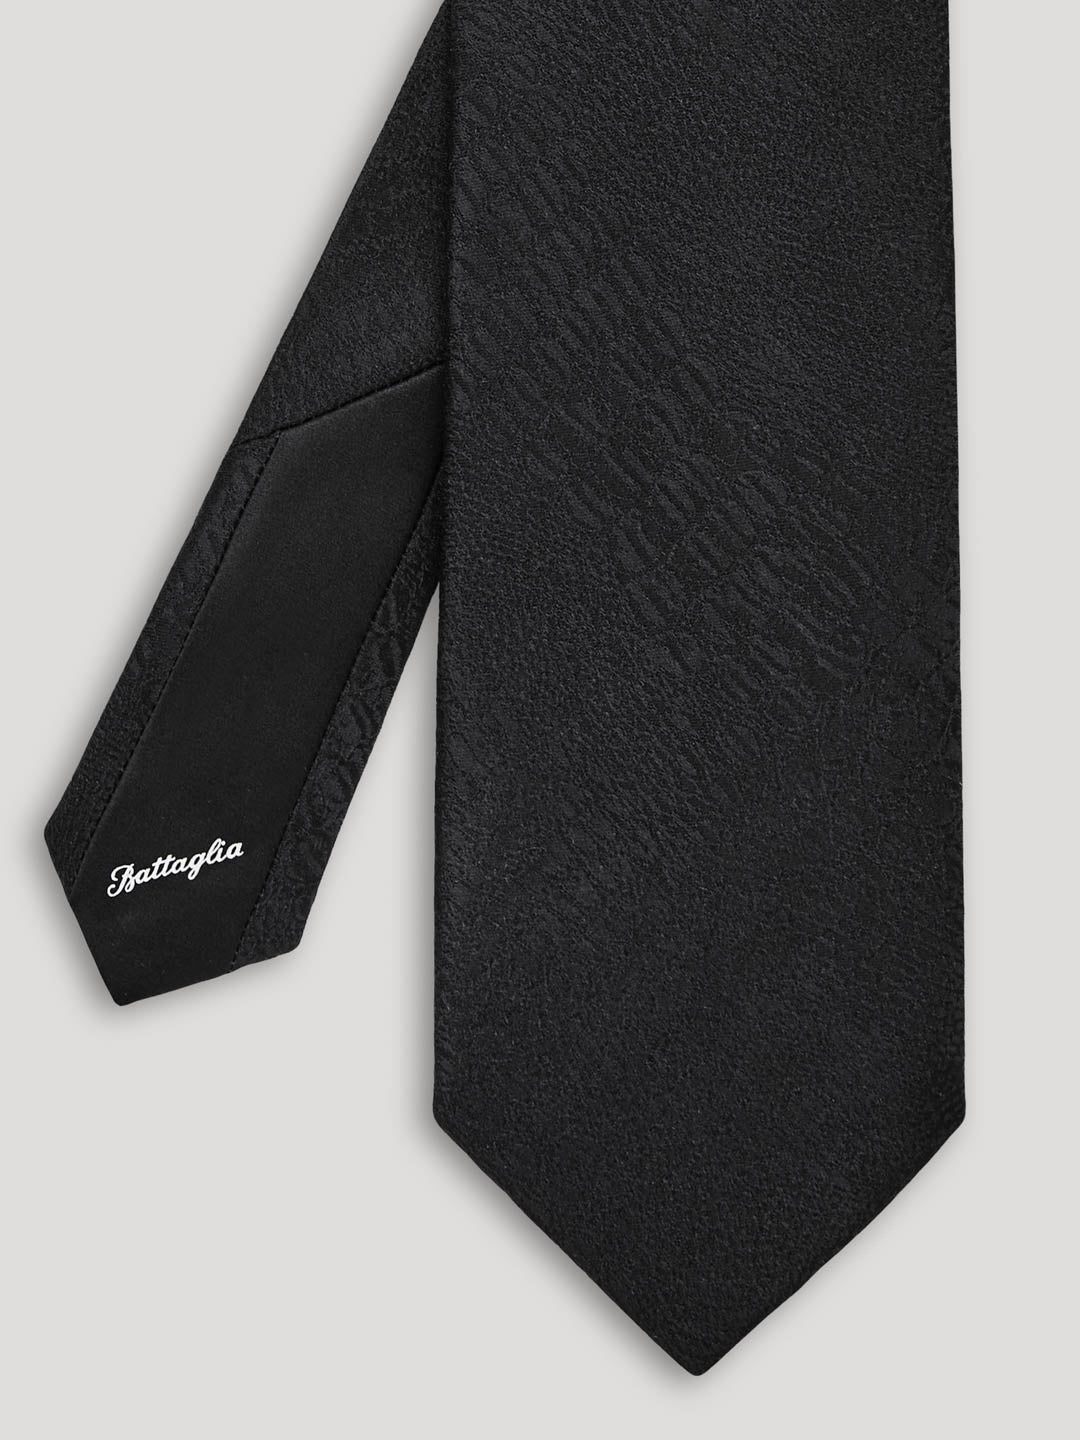 Black silk tie. 